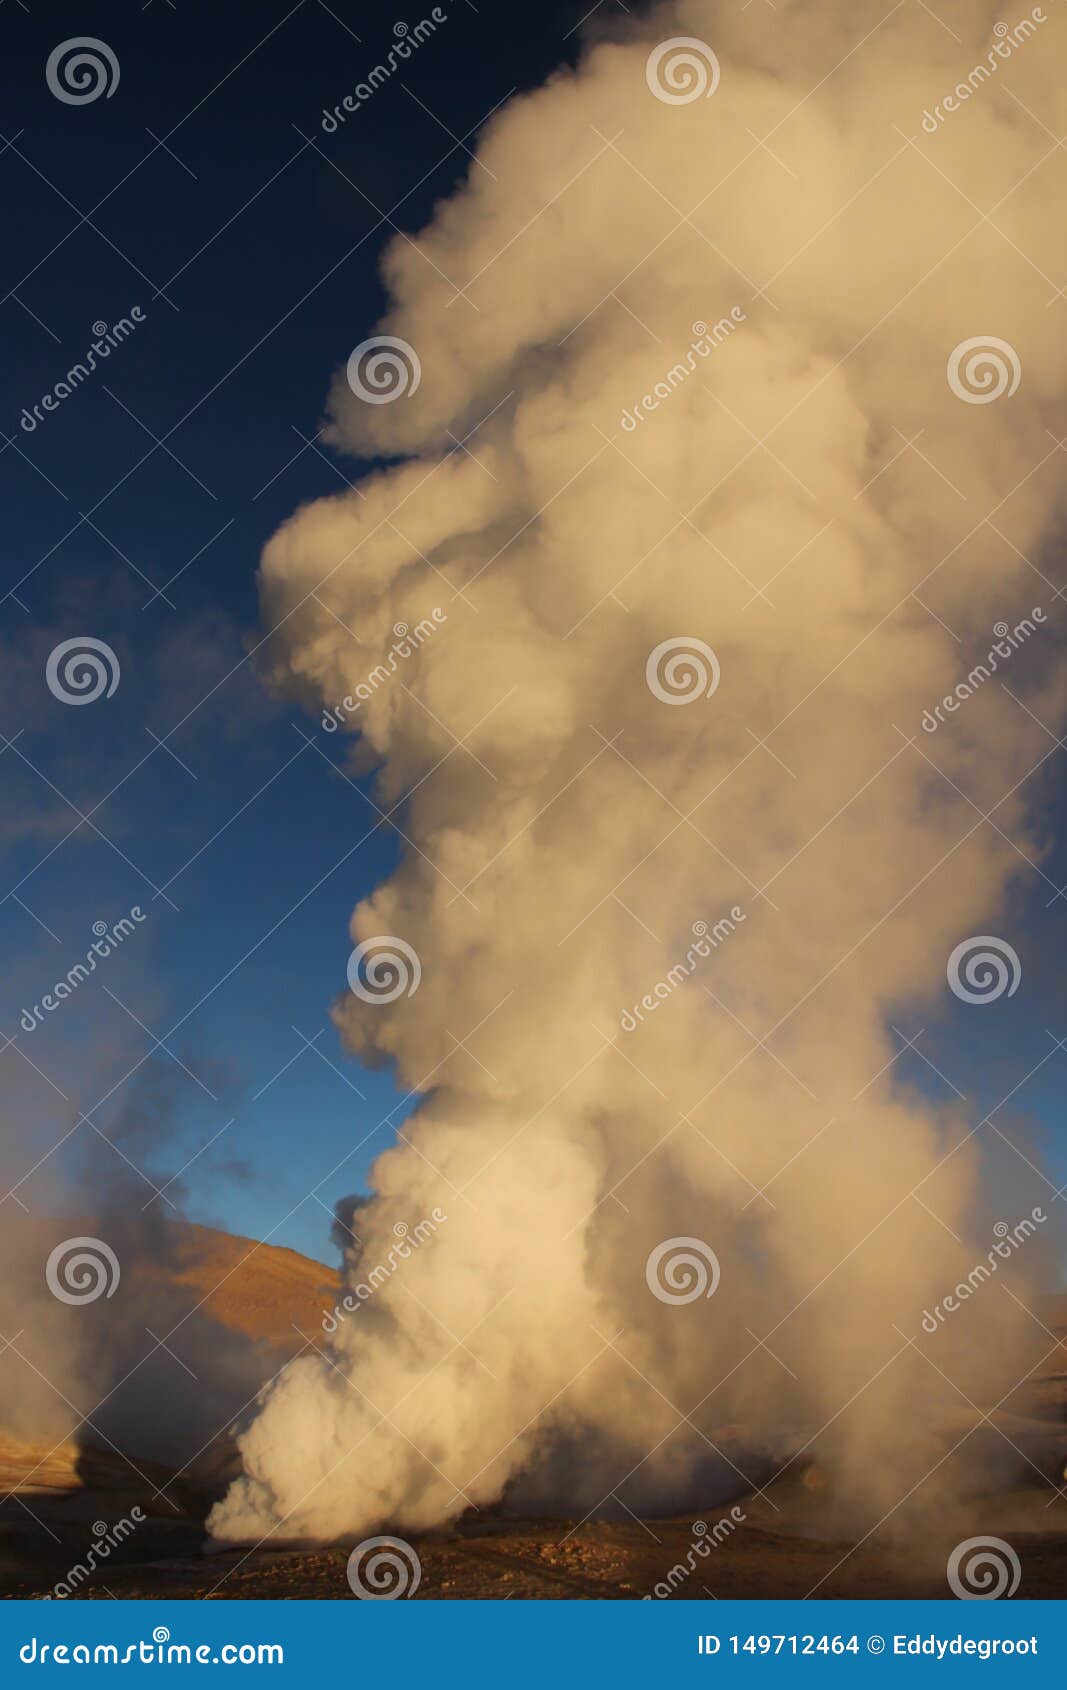 the geysers at sol de la manana